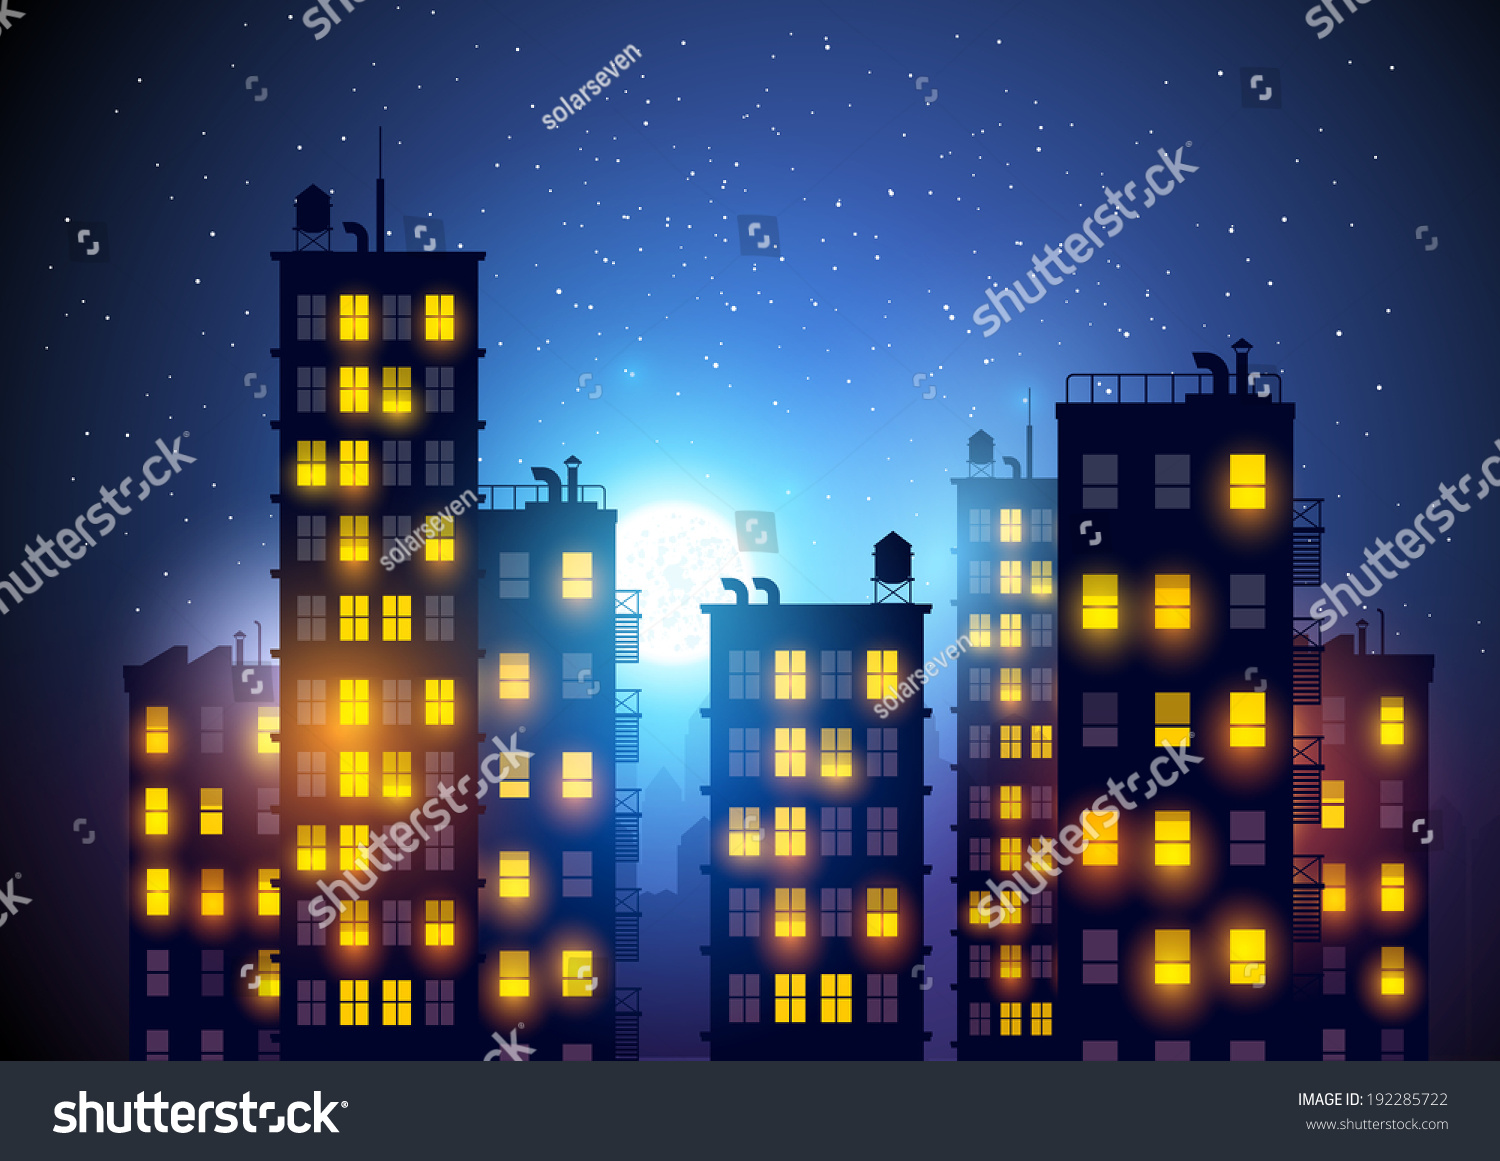 city at night clipart - photo #28